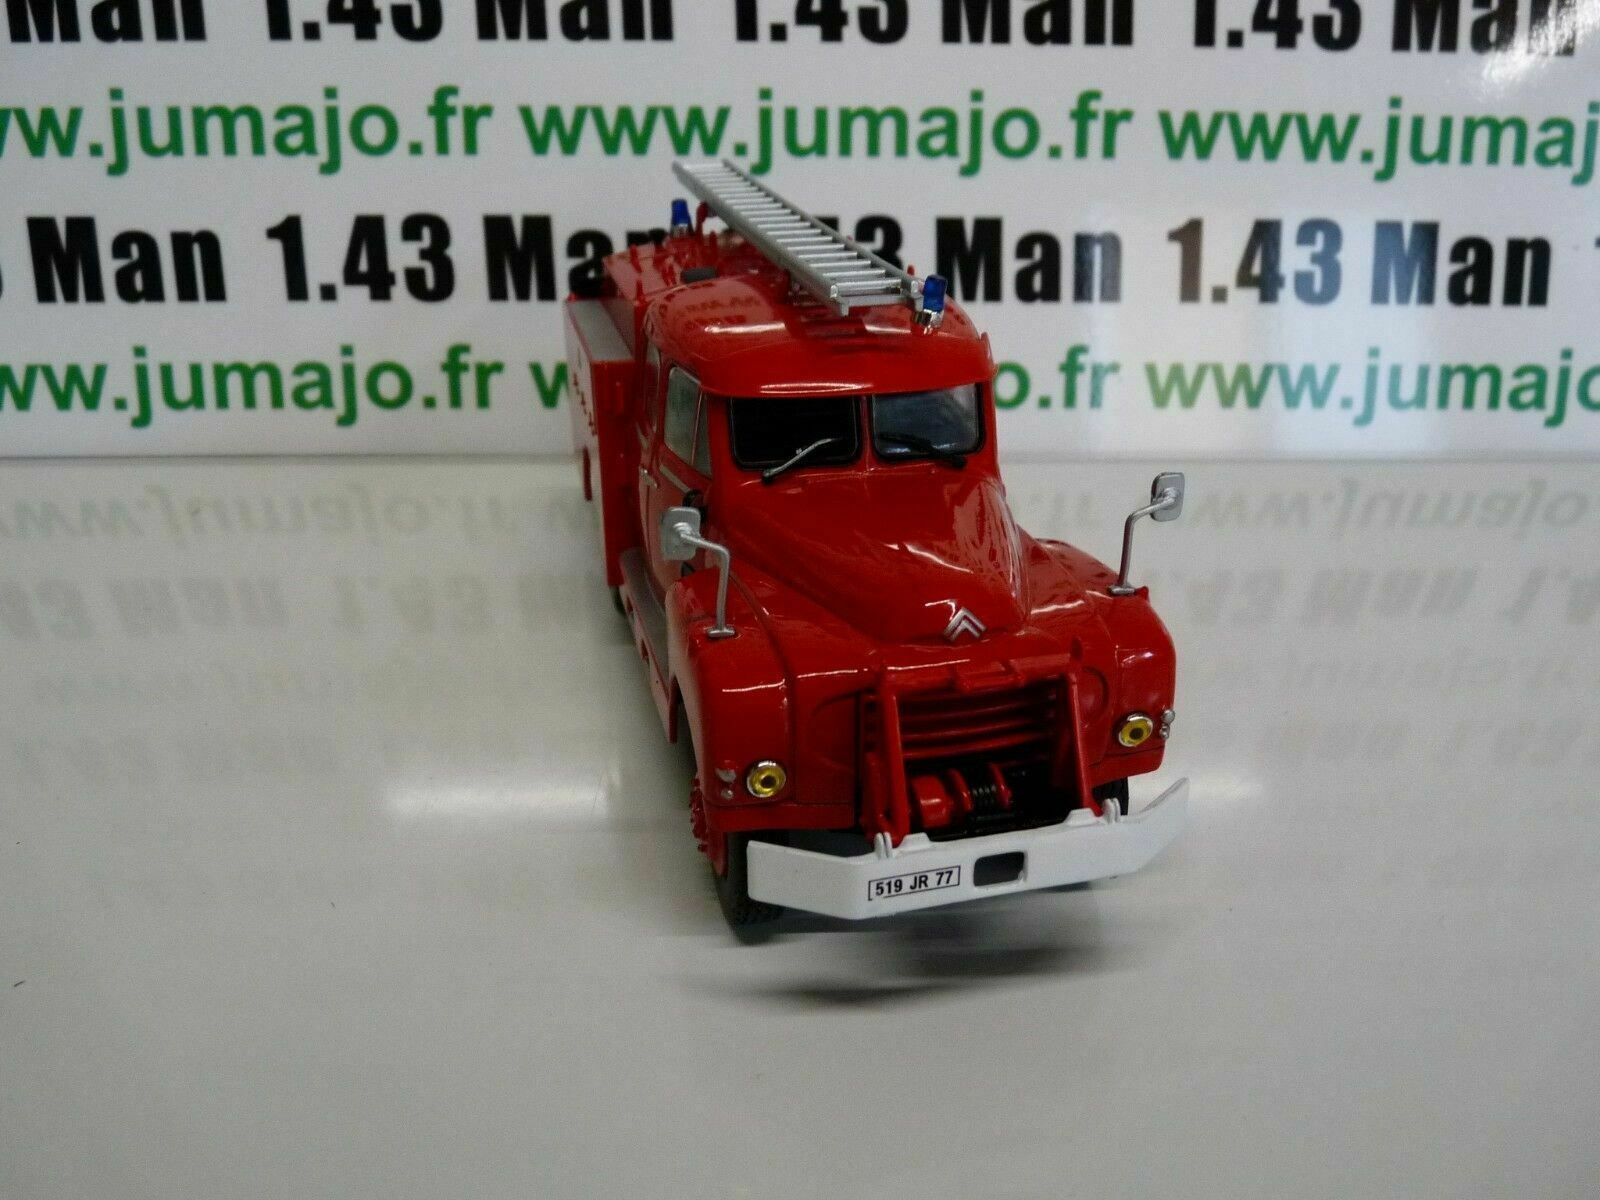 Camion de pompiers - N/A - Kiabi - 45.89€